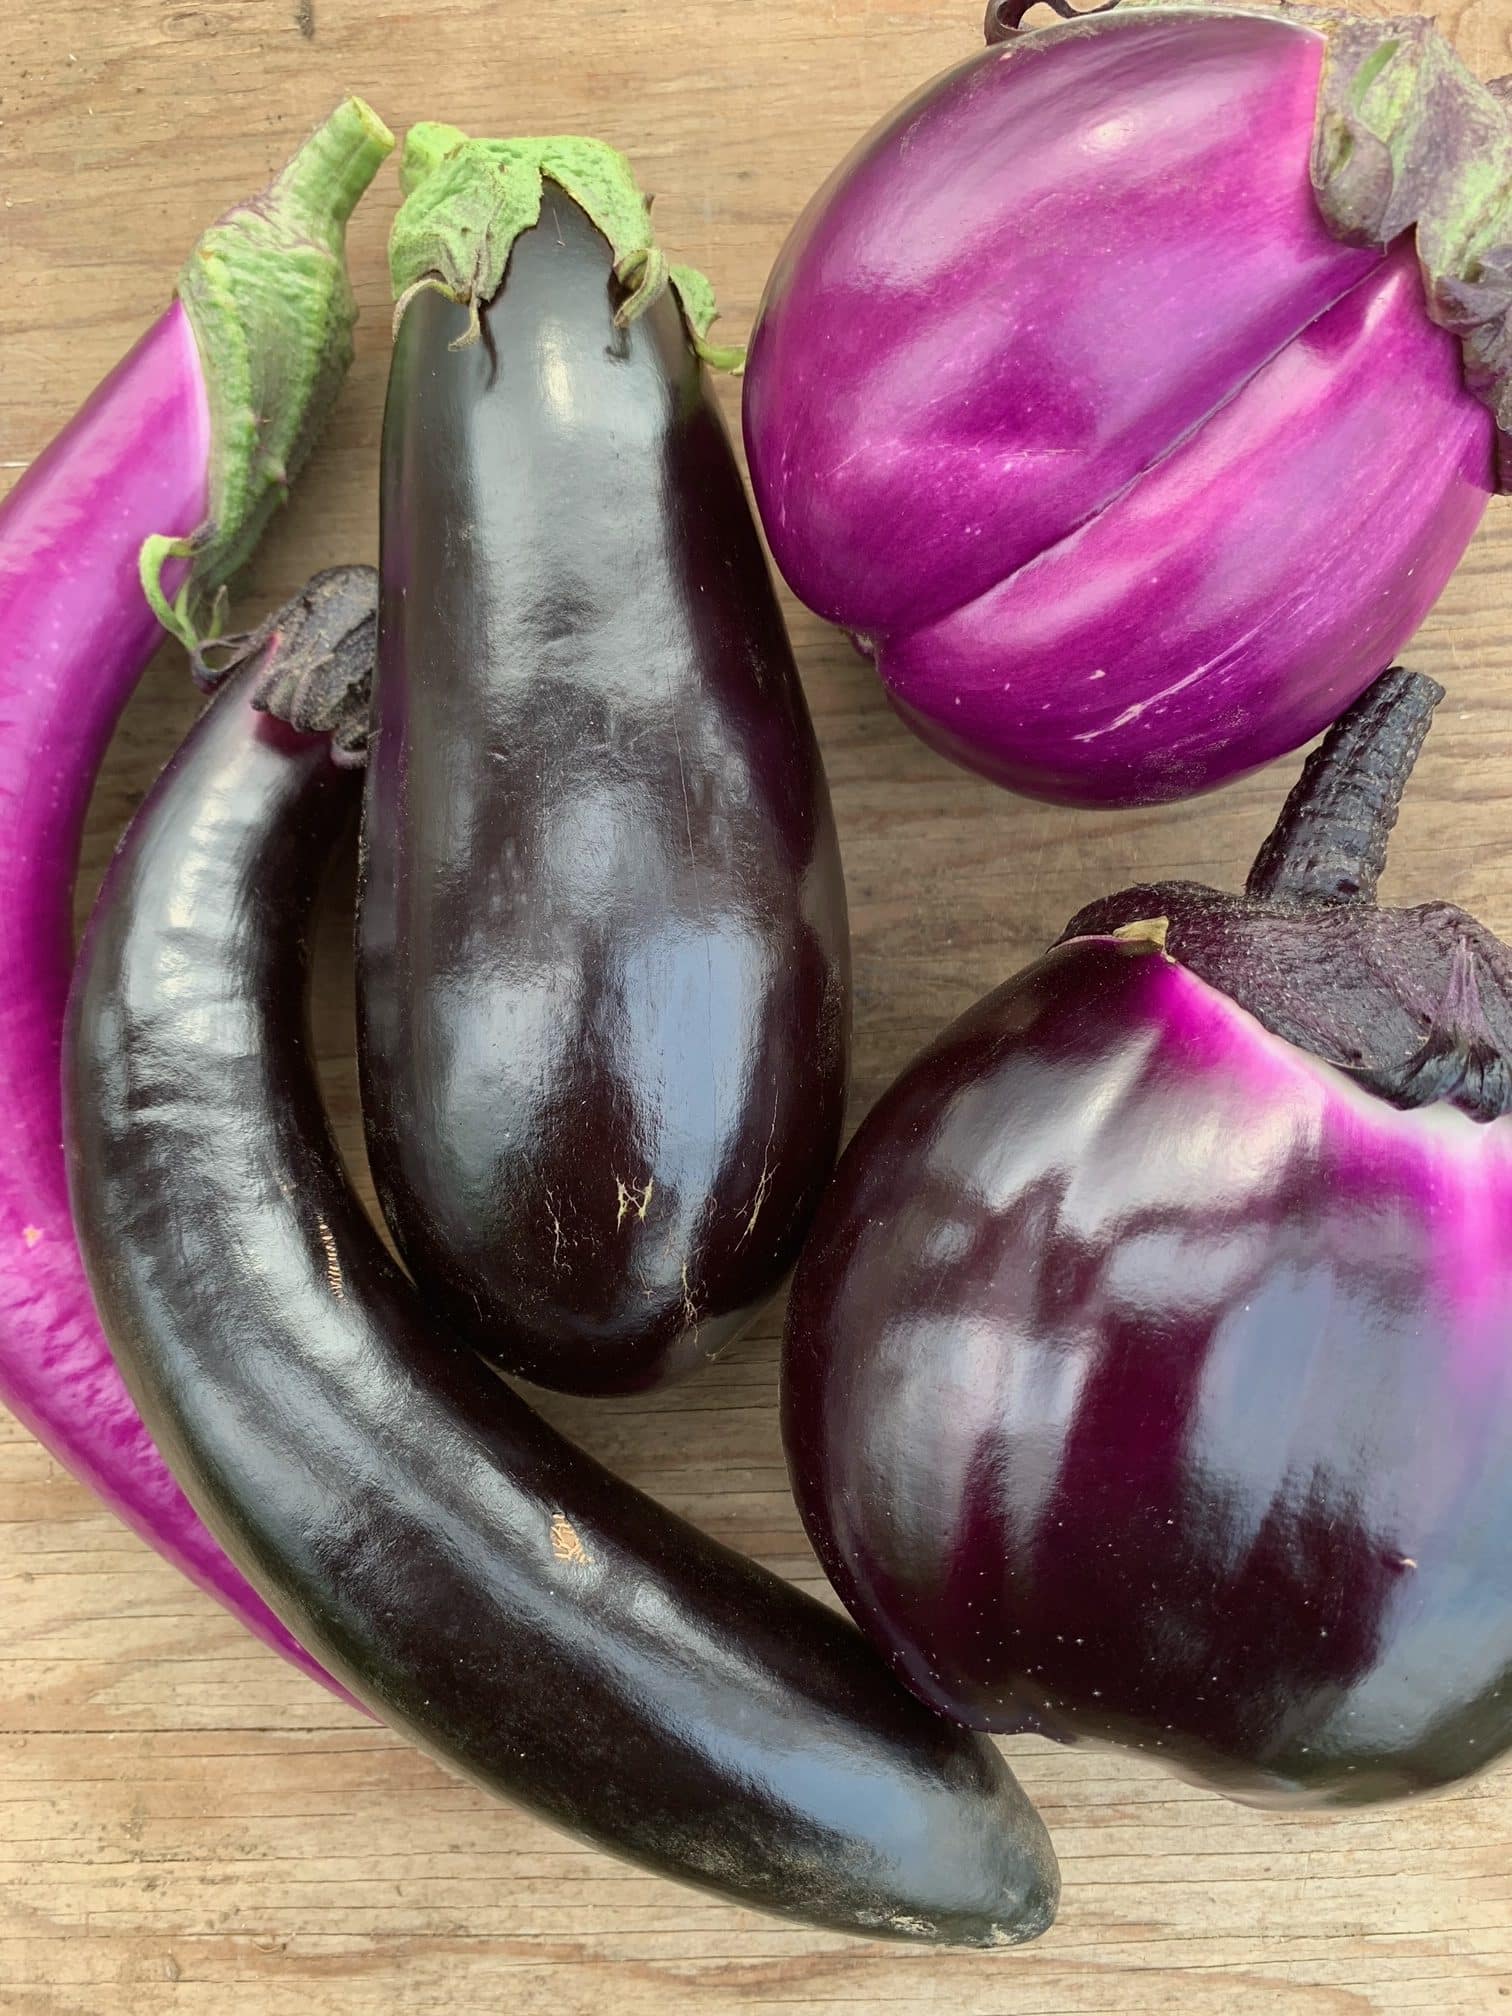 1lb+ eggplant